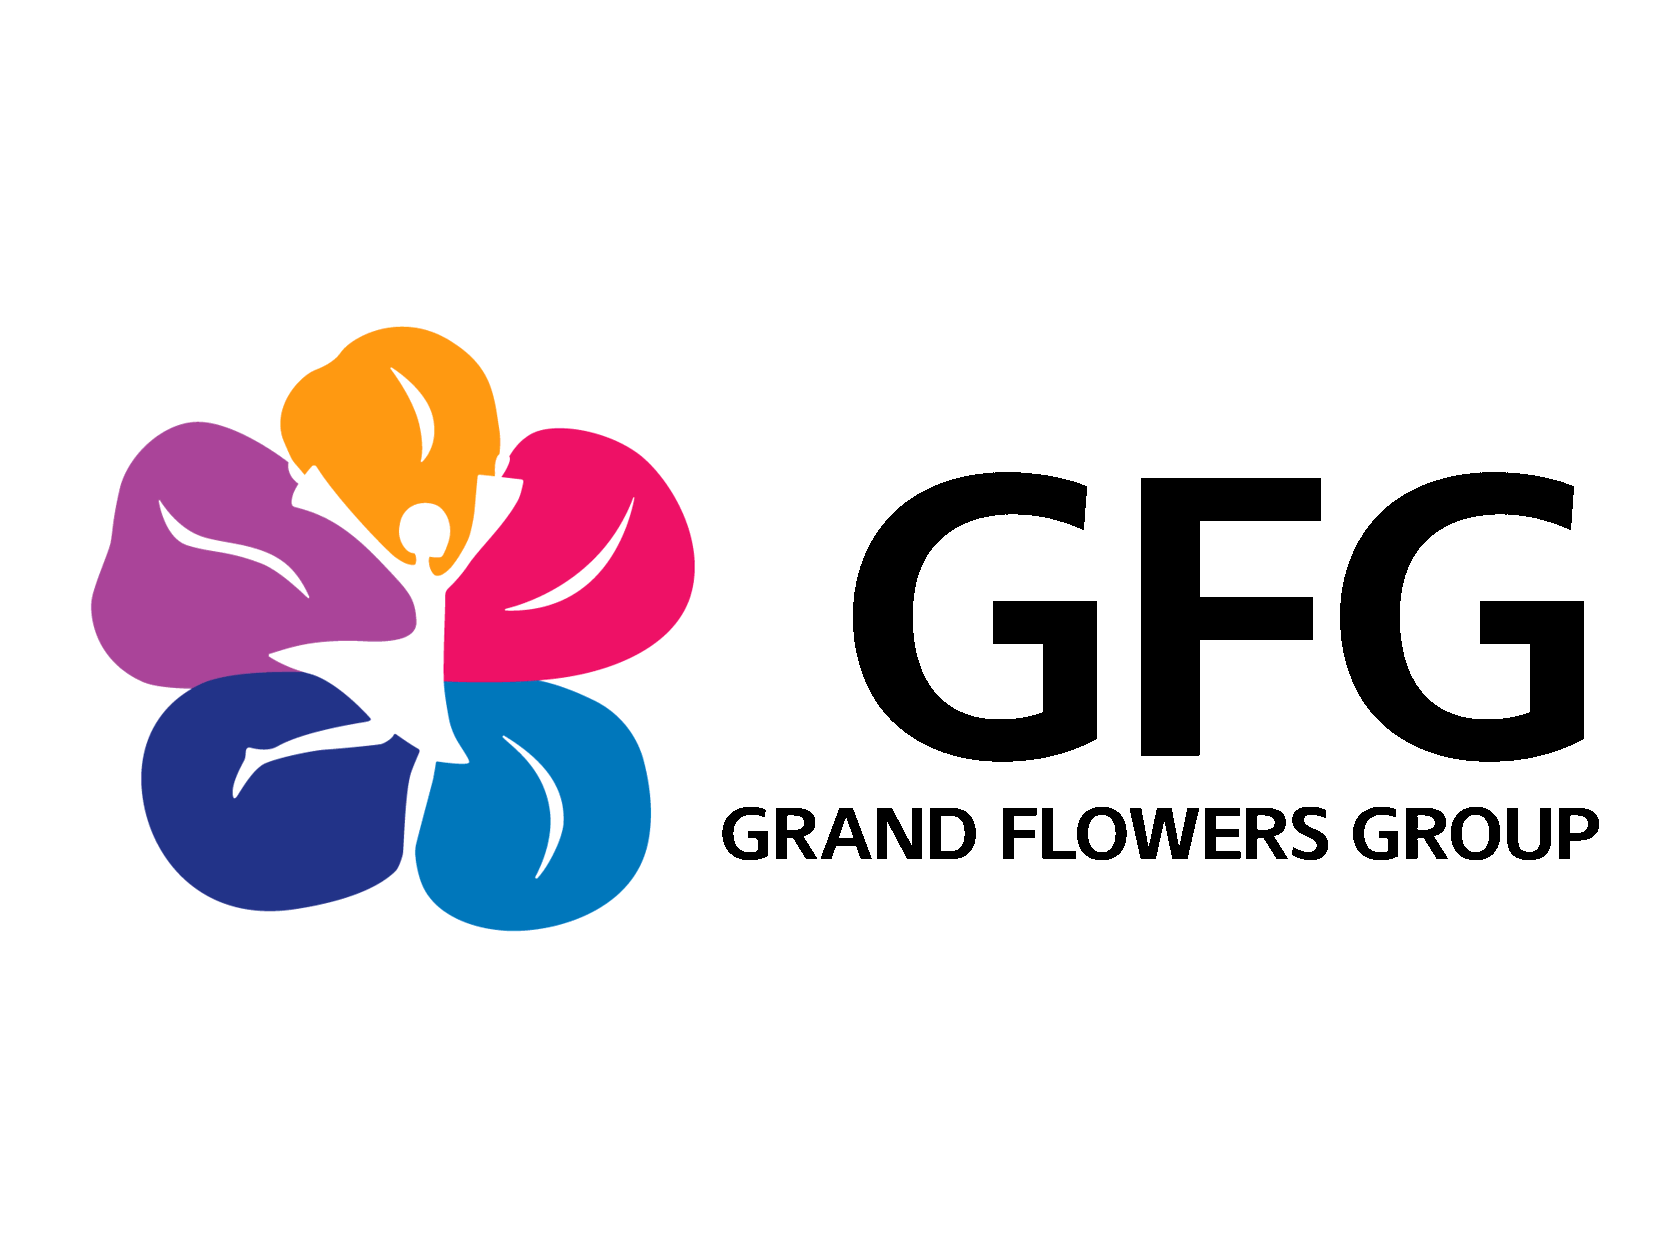 Гранд каприз. Grand Flowers Group цветы оптом. Фловер группа.